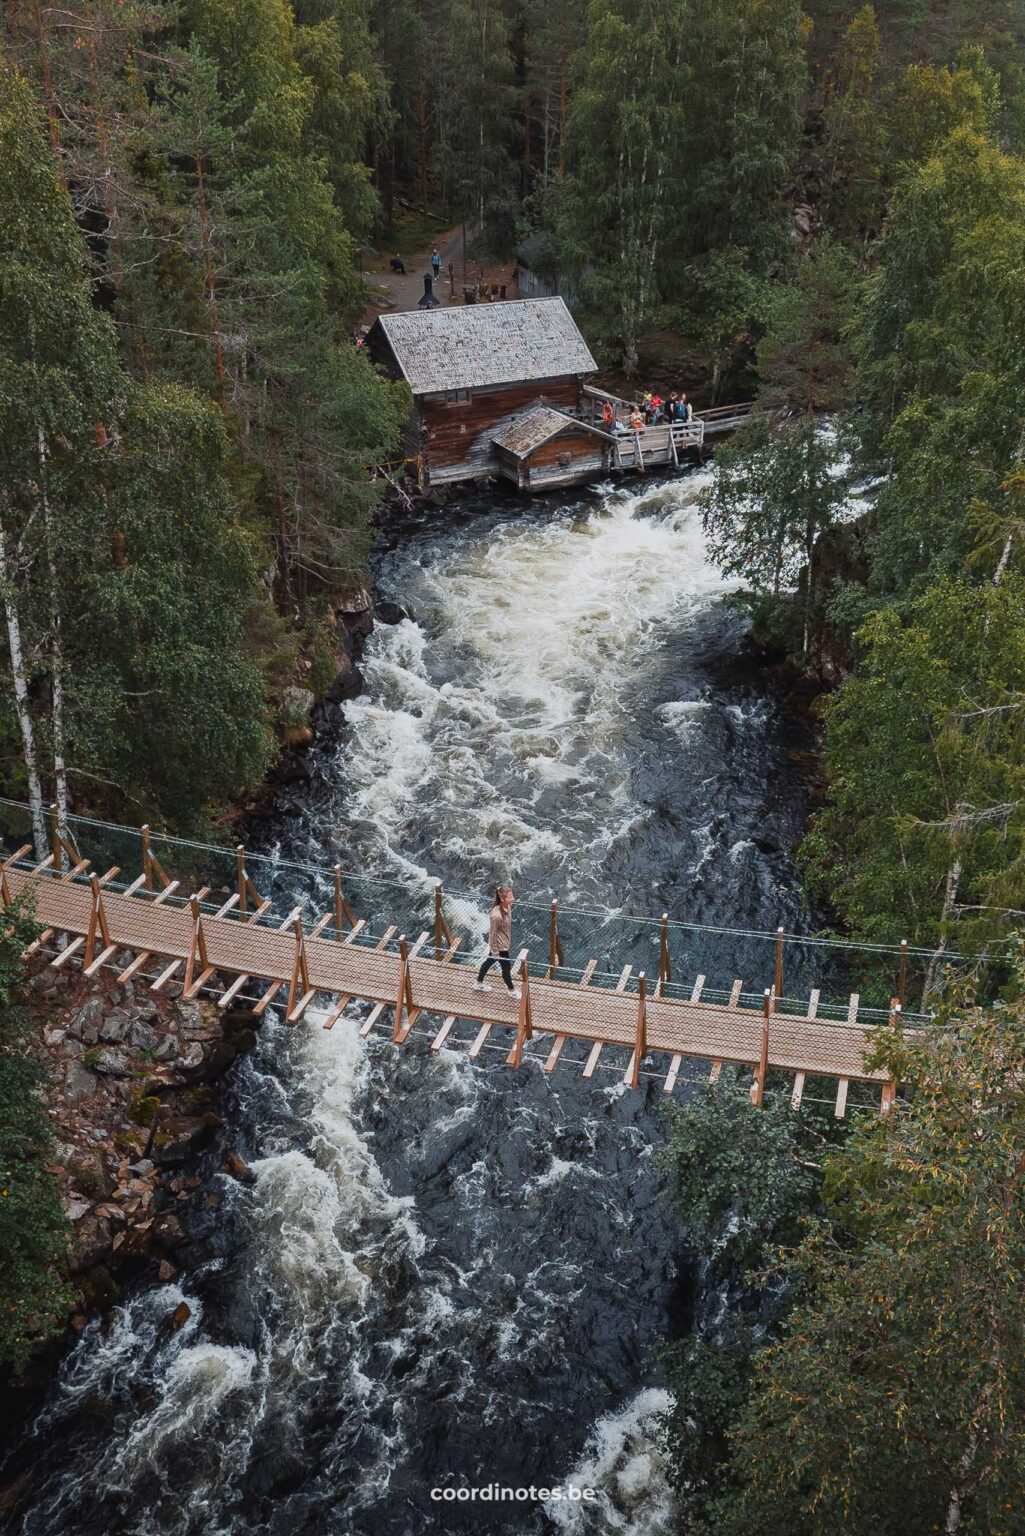 Sarah crossing the suspension bridge over the Myllykoski Rapid at Pieni Karhunkierros